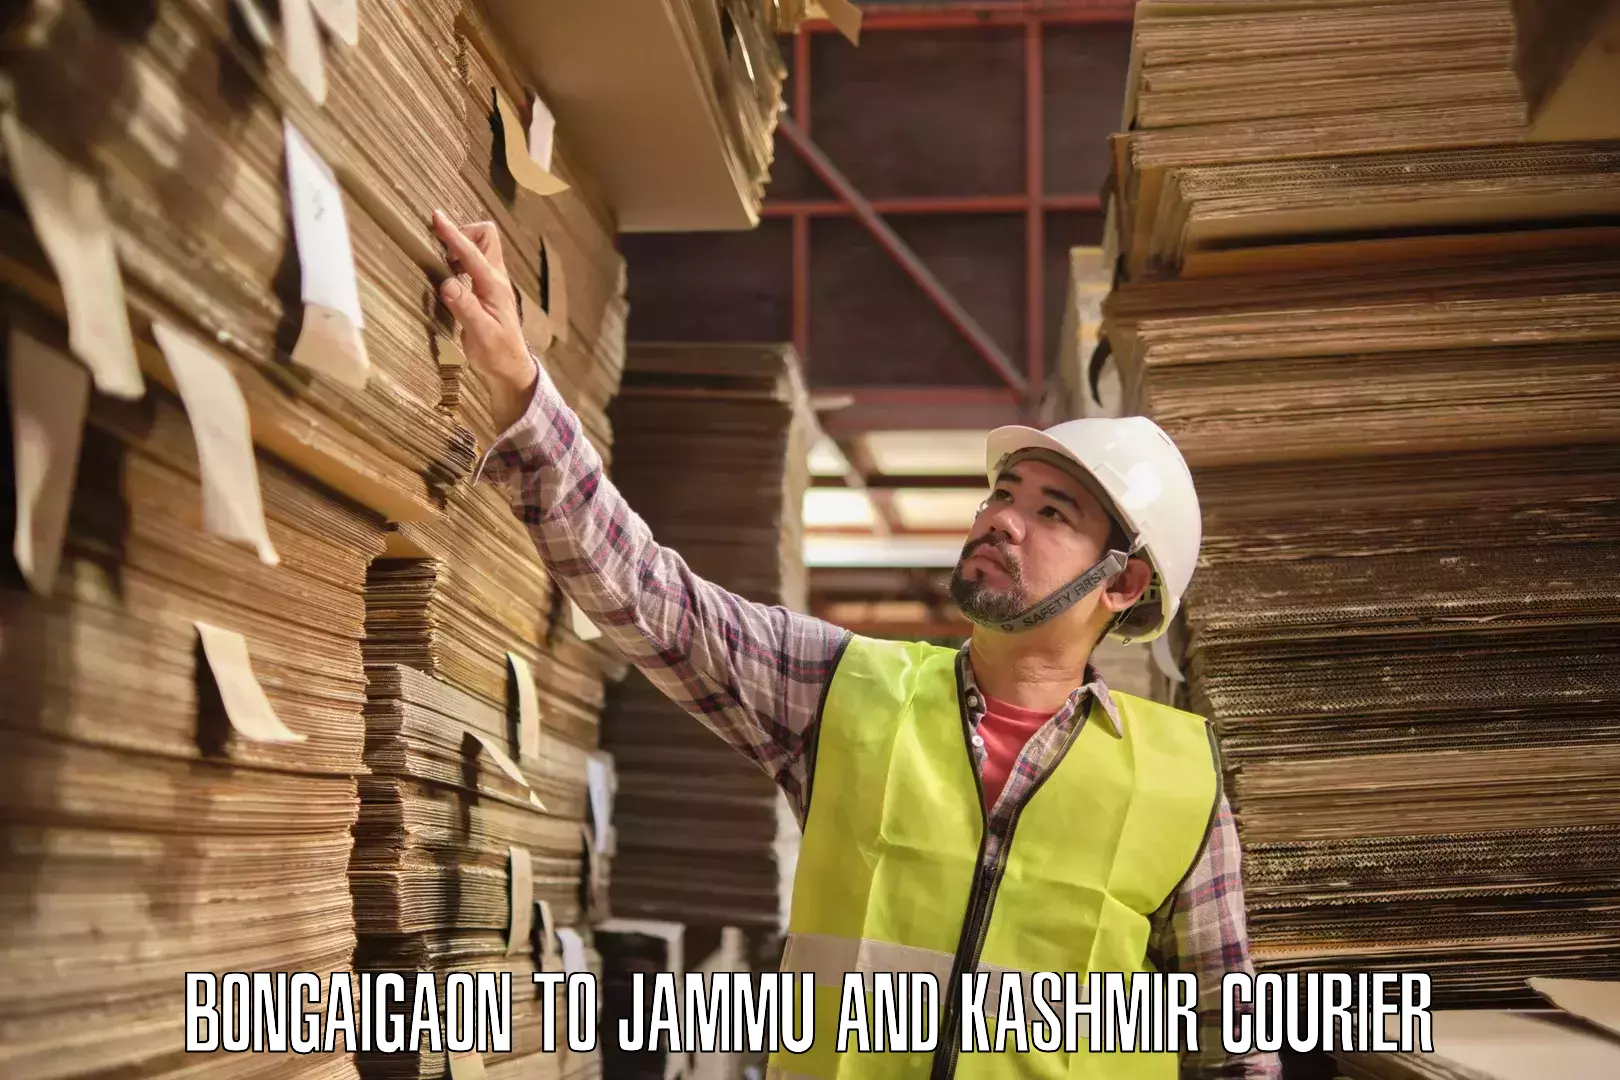 Courier service efficiency Bongaigaon to Srinagar Kashmir